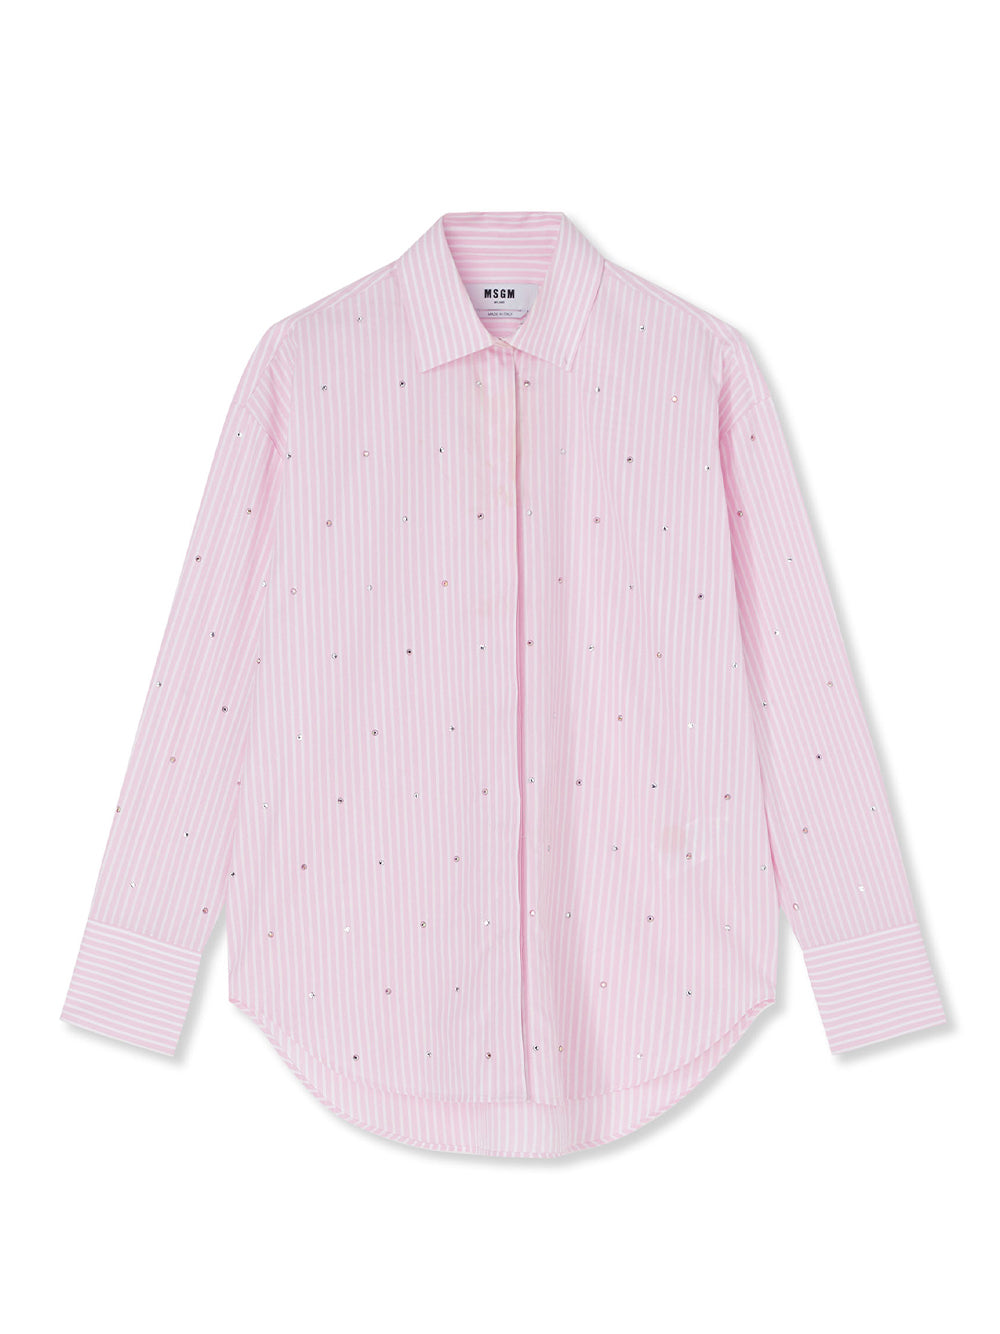 Camicia/shirt Pink